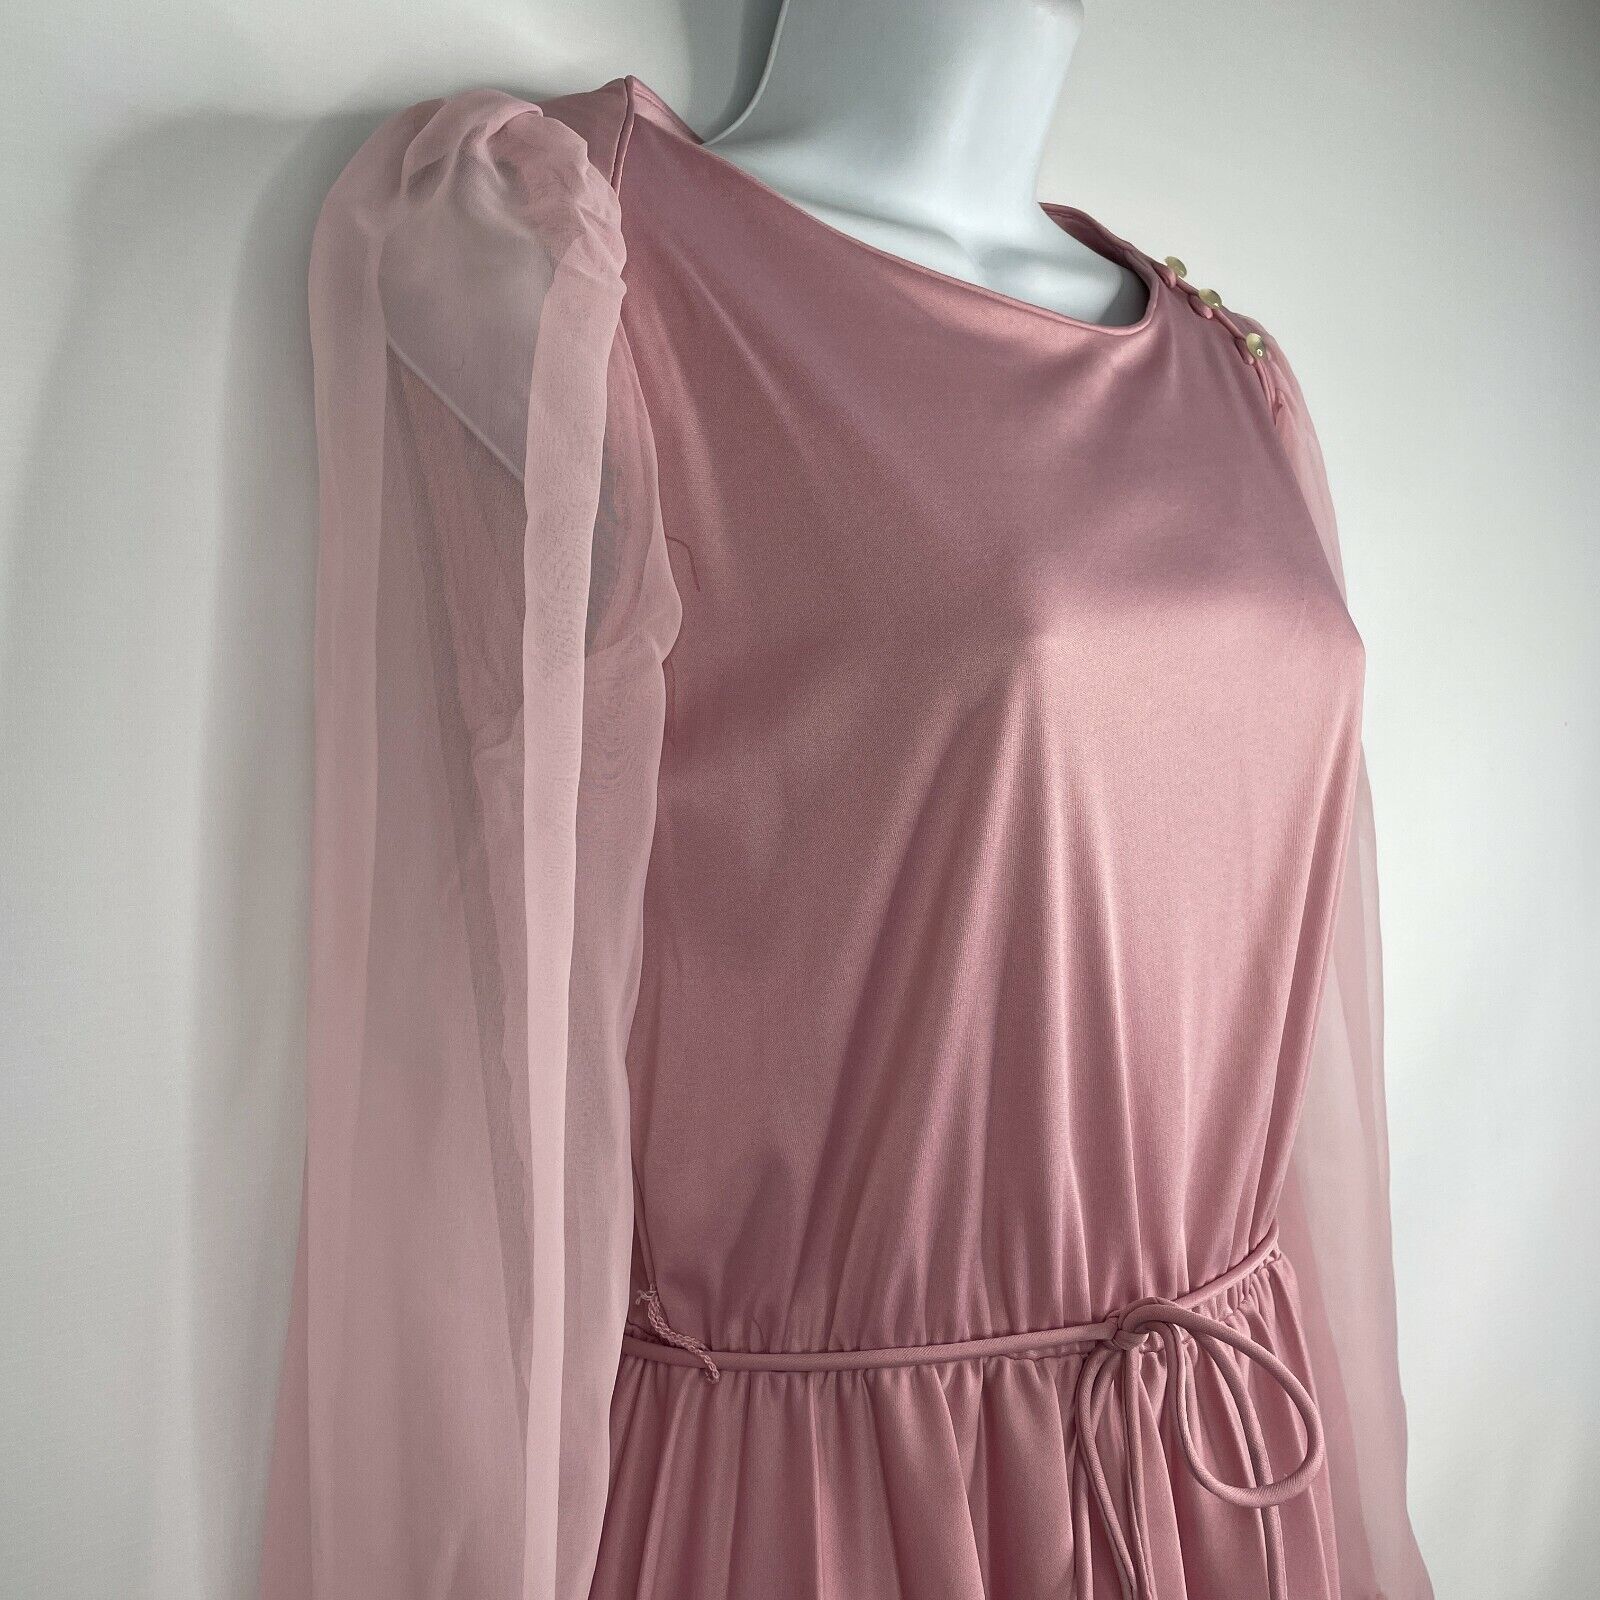 Vintage 70s Lavender Belted Contrast Stich Pleat Fit Flare Dress Size L / US 10 / IT 46 - 4 Thumbnail